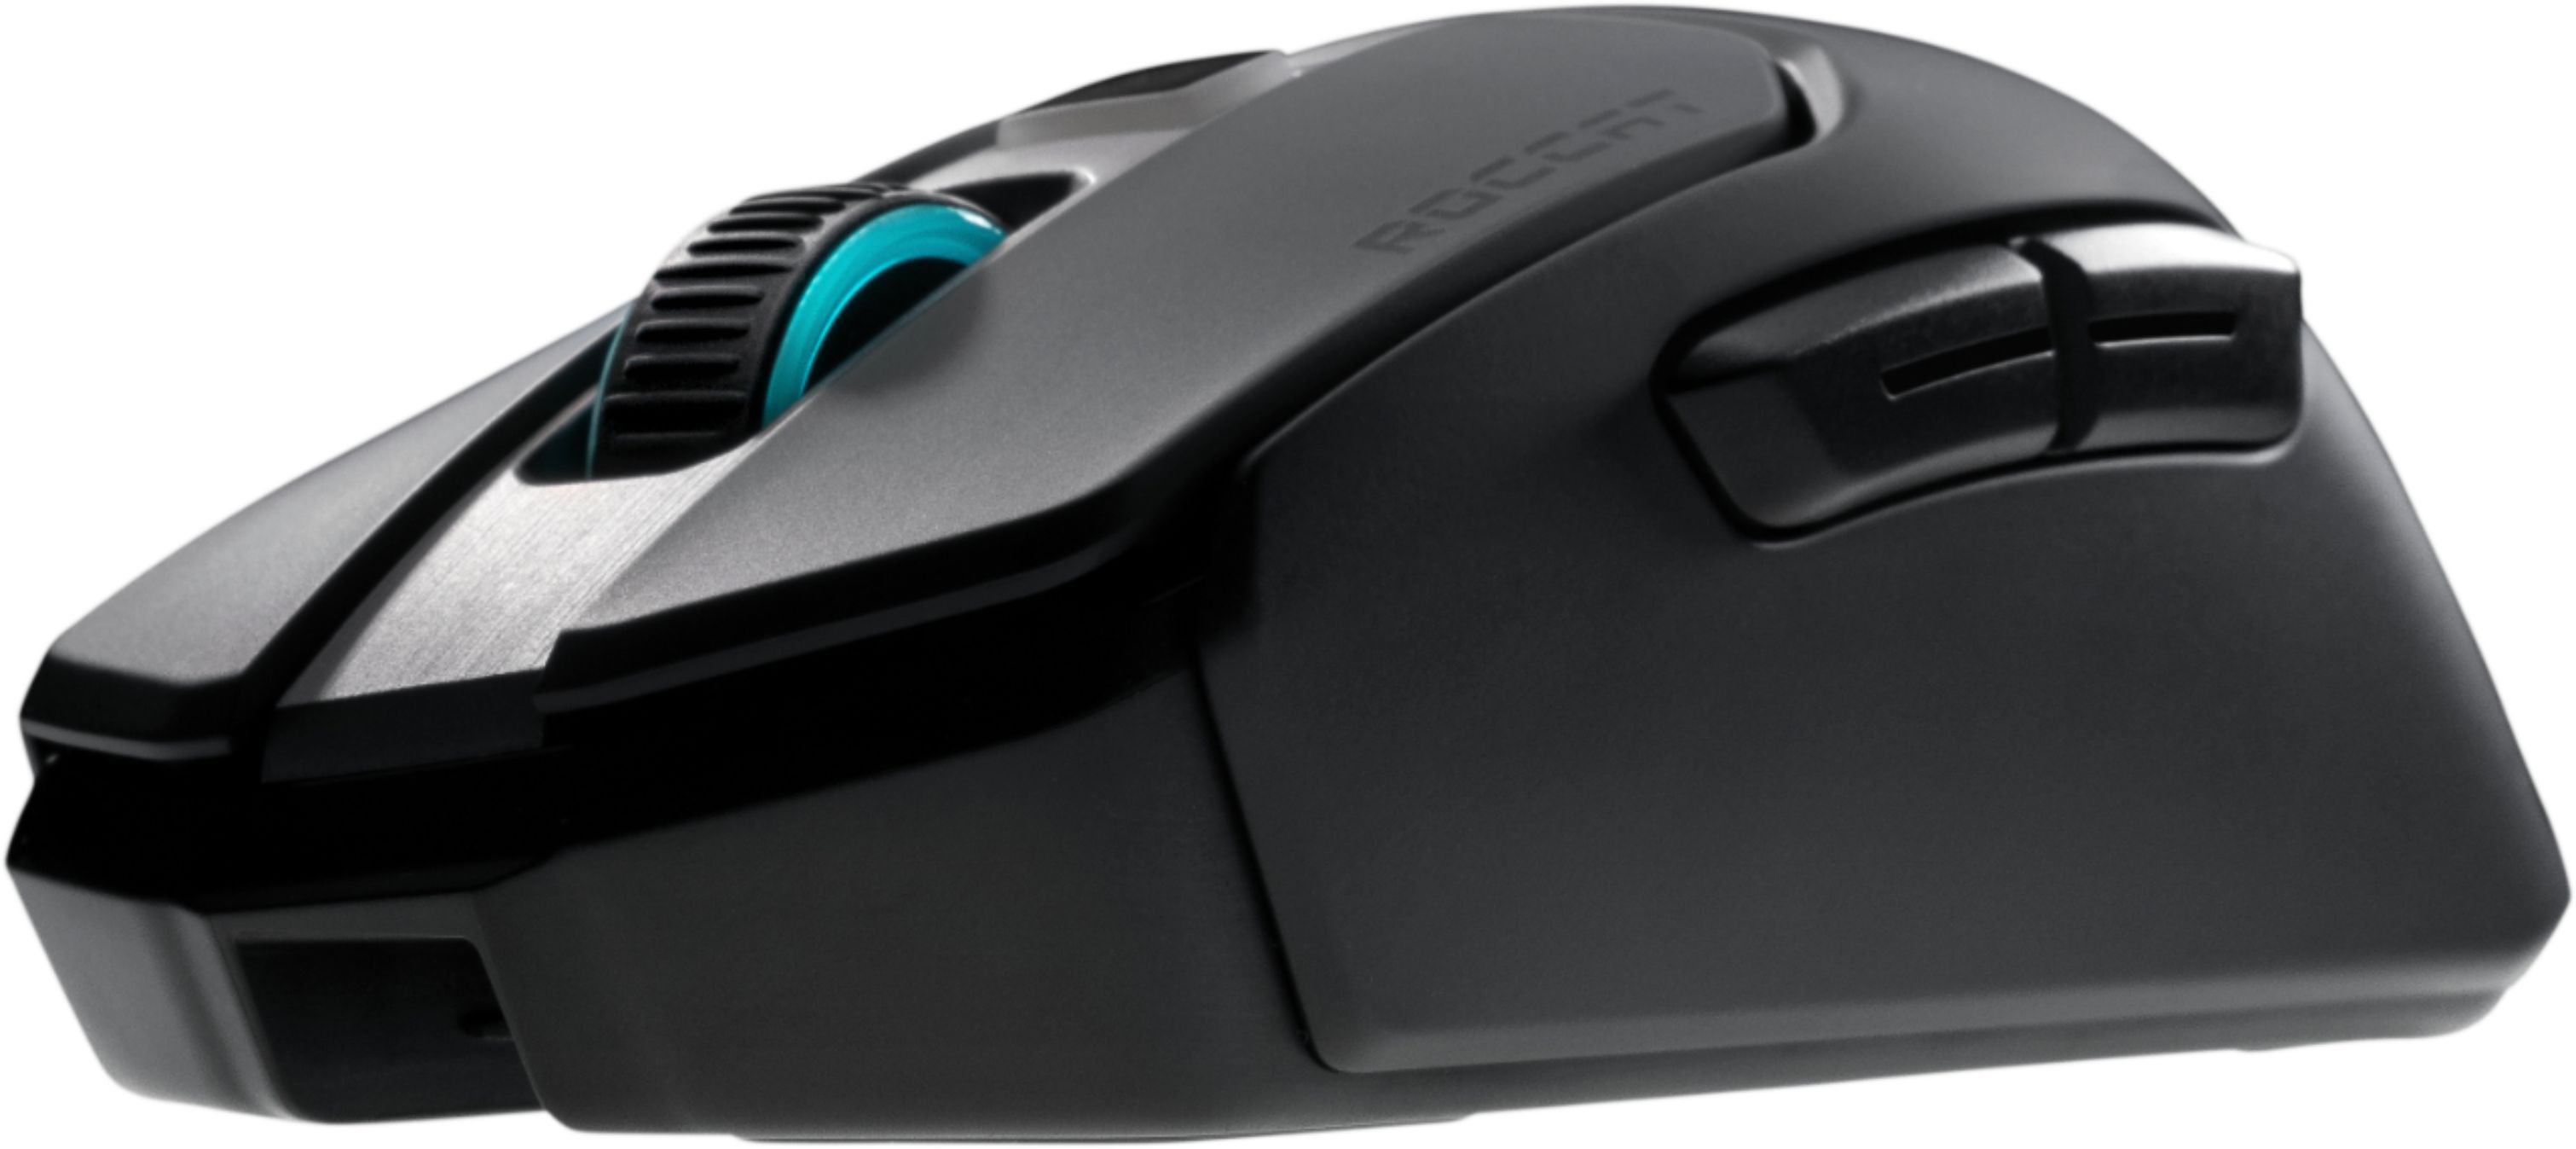 Roccat Kain 0 Aimo Wireless Rgb 105 Gram 16k Dpi Owl Eye Sensor Gaming Mouse With Titan Click Black Roc 11 615 Bk Best Buy